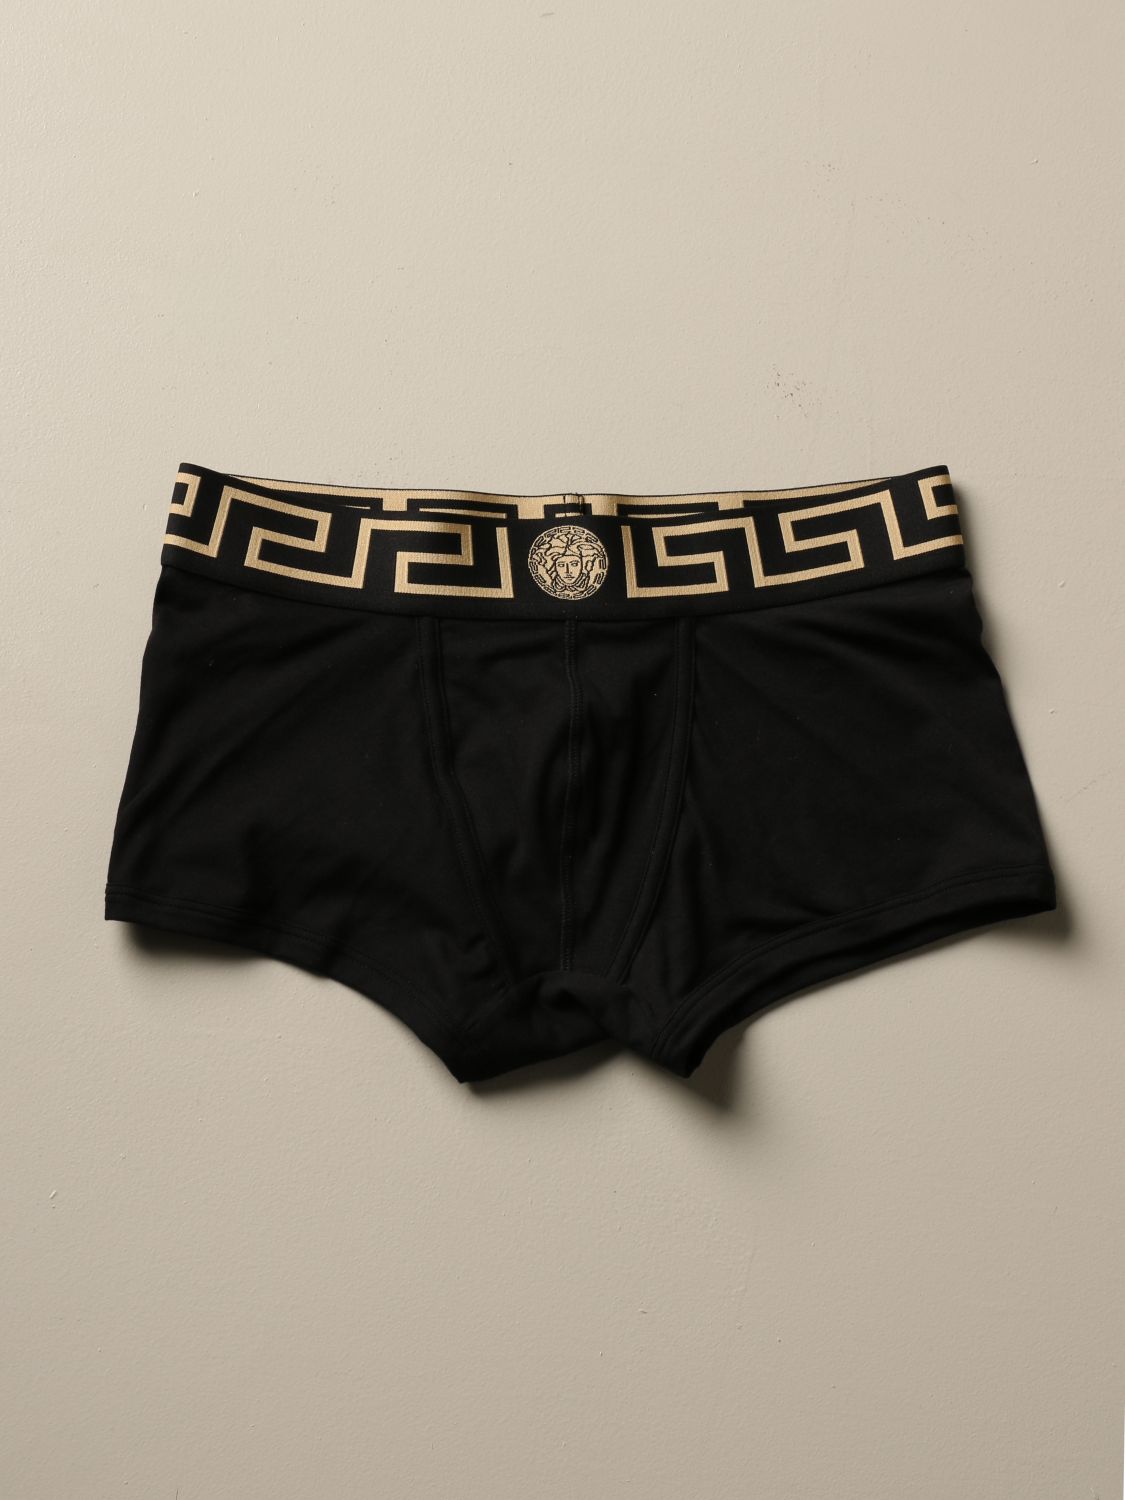 Versace Underwear Outlet: Mutanda a parigamba - Nero | Intimo Versace